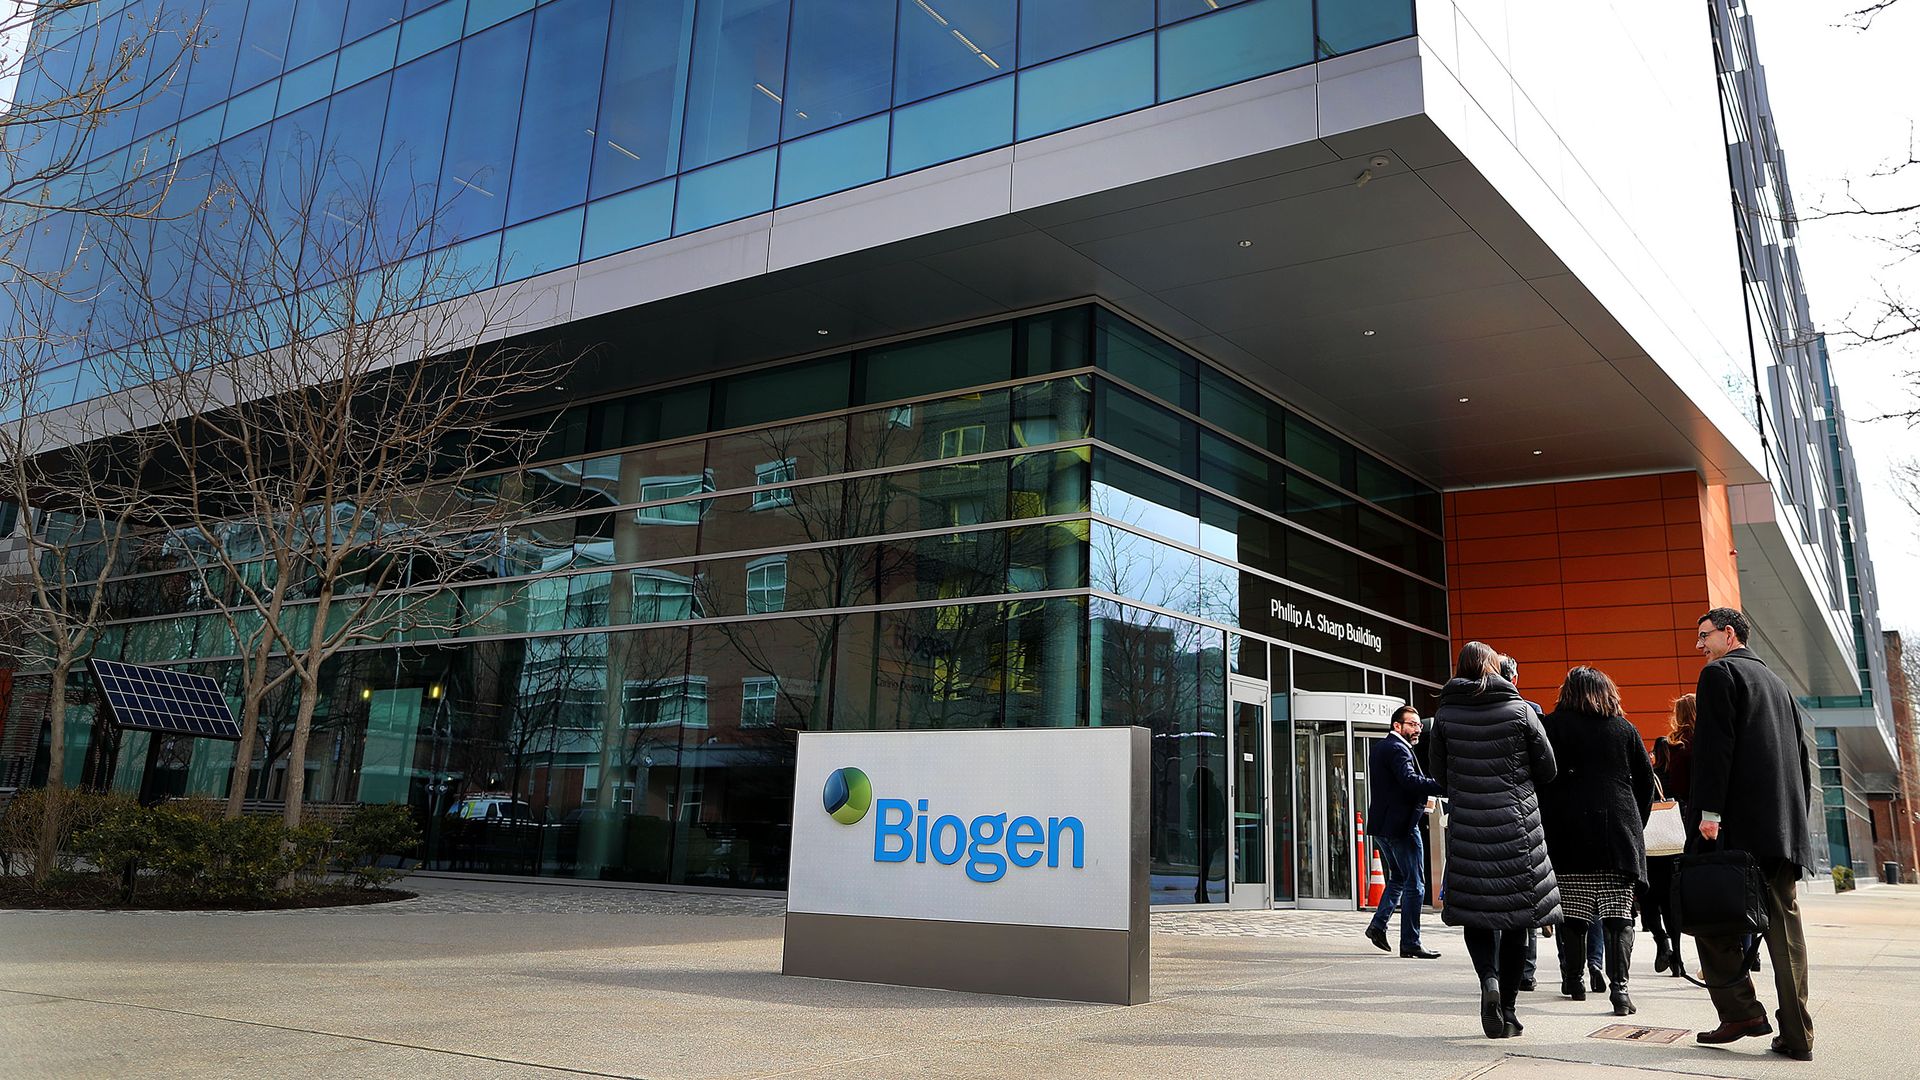 Biogen's sign in front of its headquarters building.